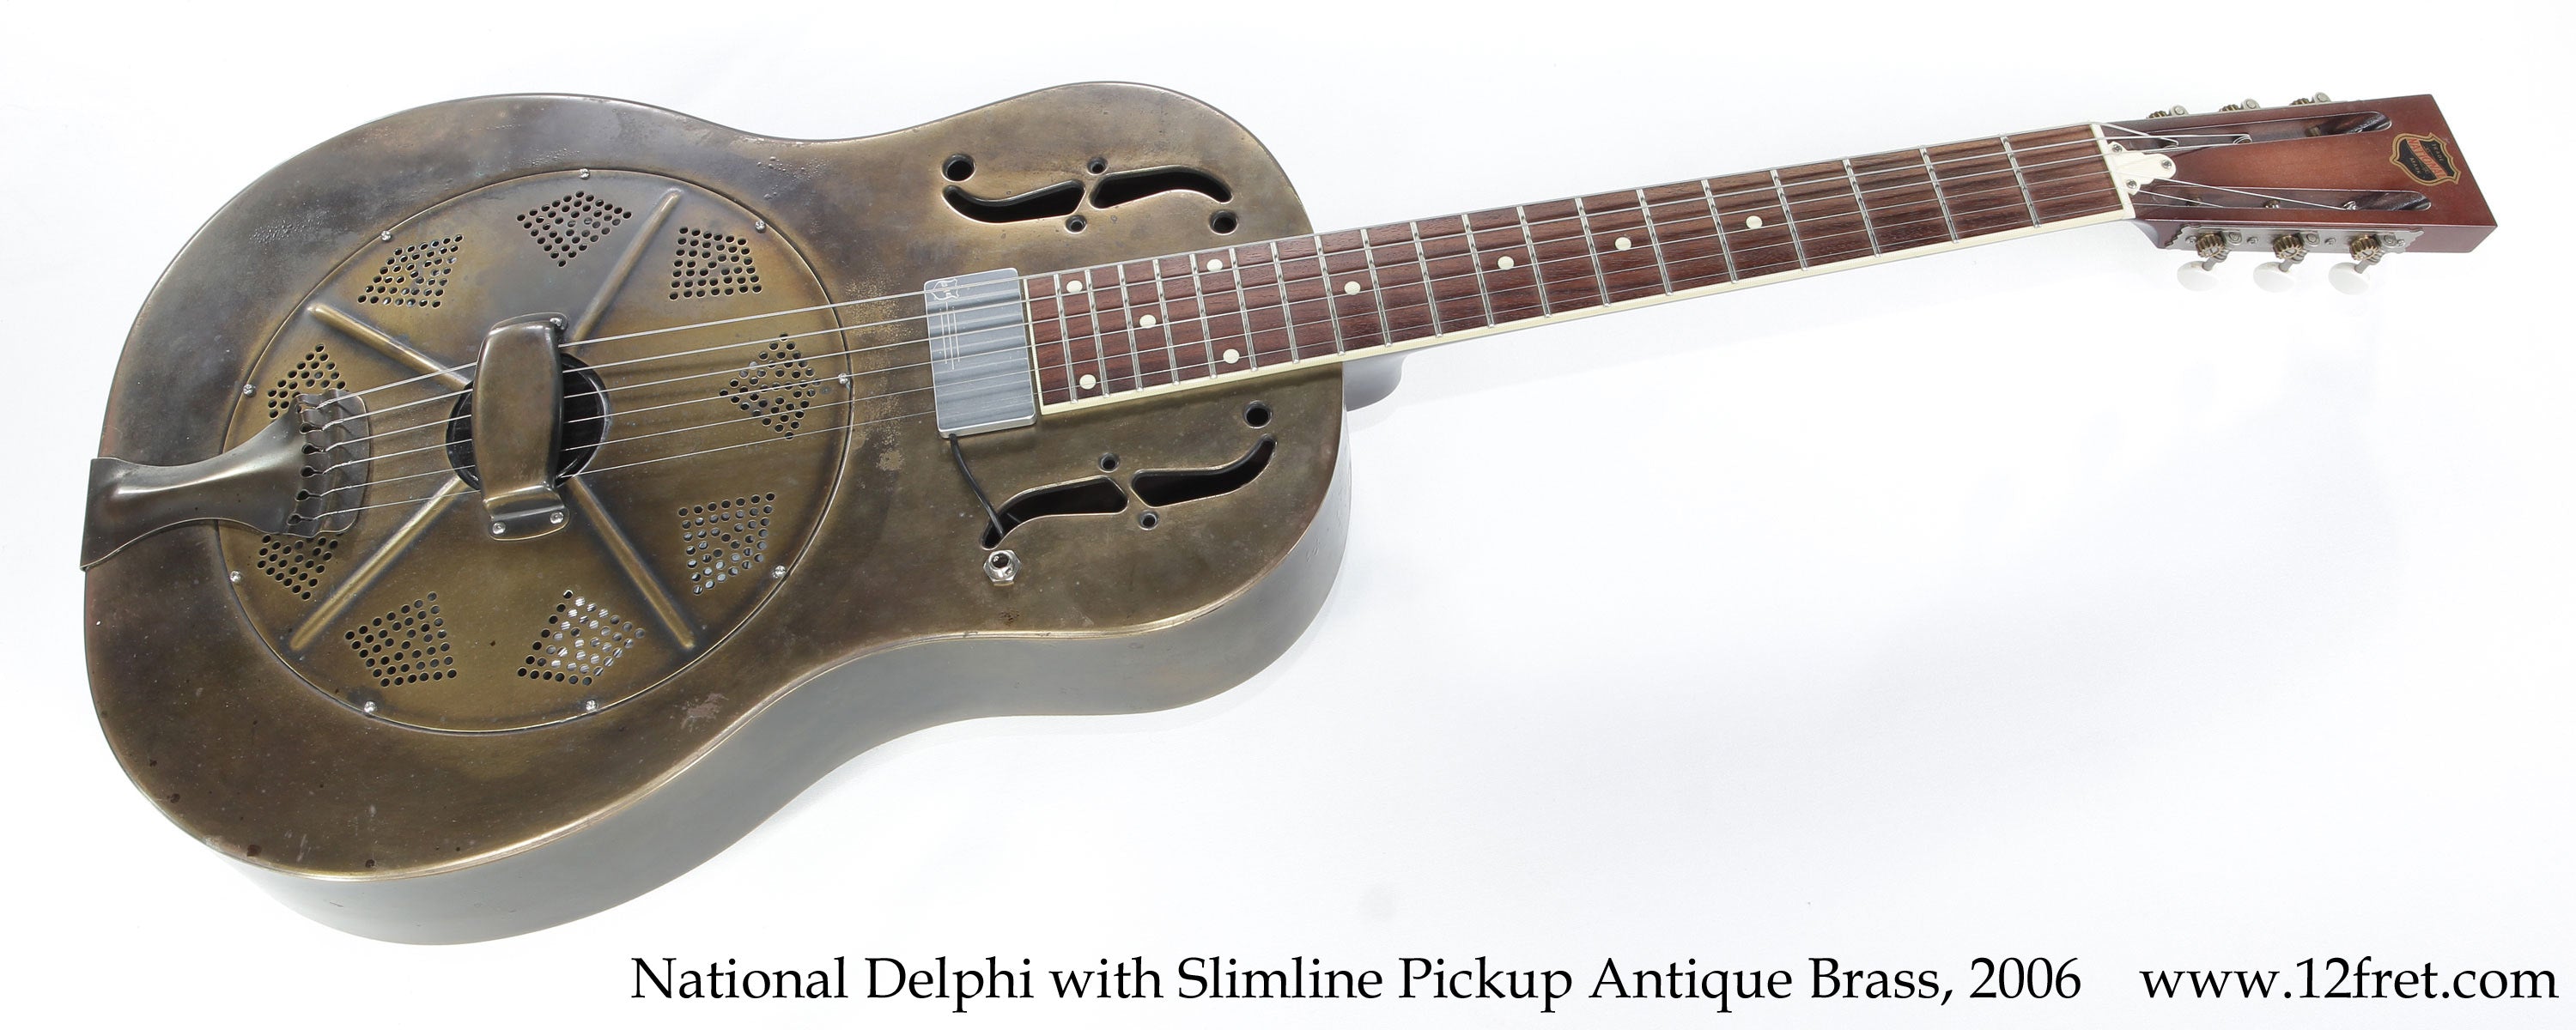 National Delphi with Slimline Pickup Antique Brass, 2006 - The Twelfth Fret